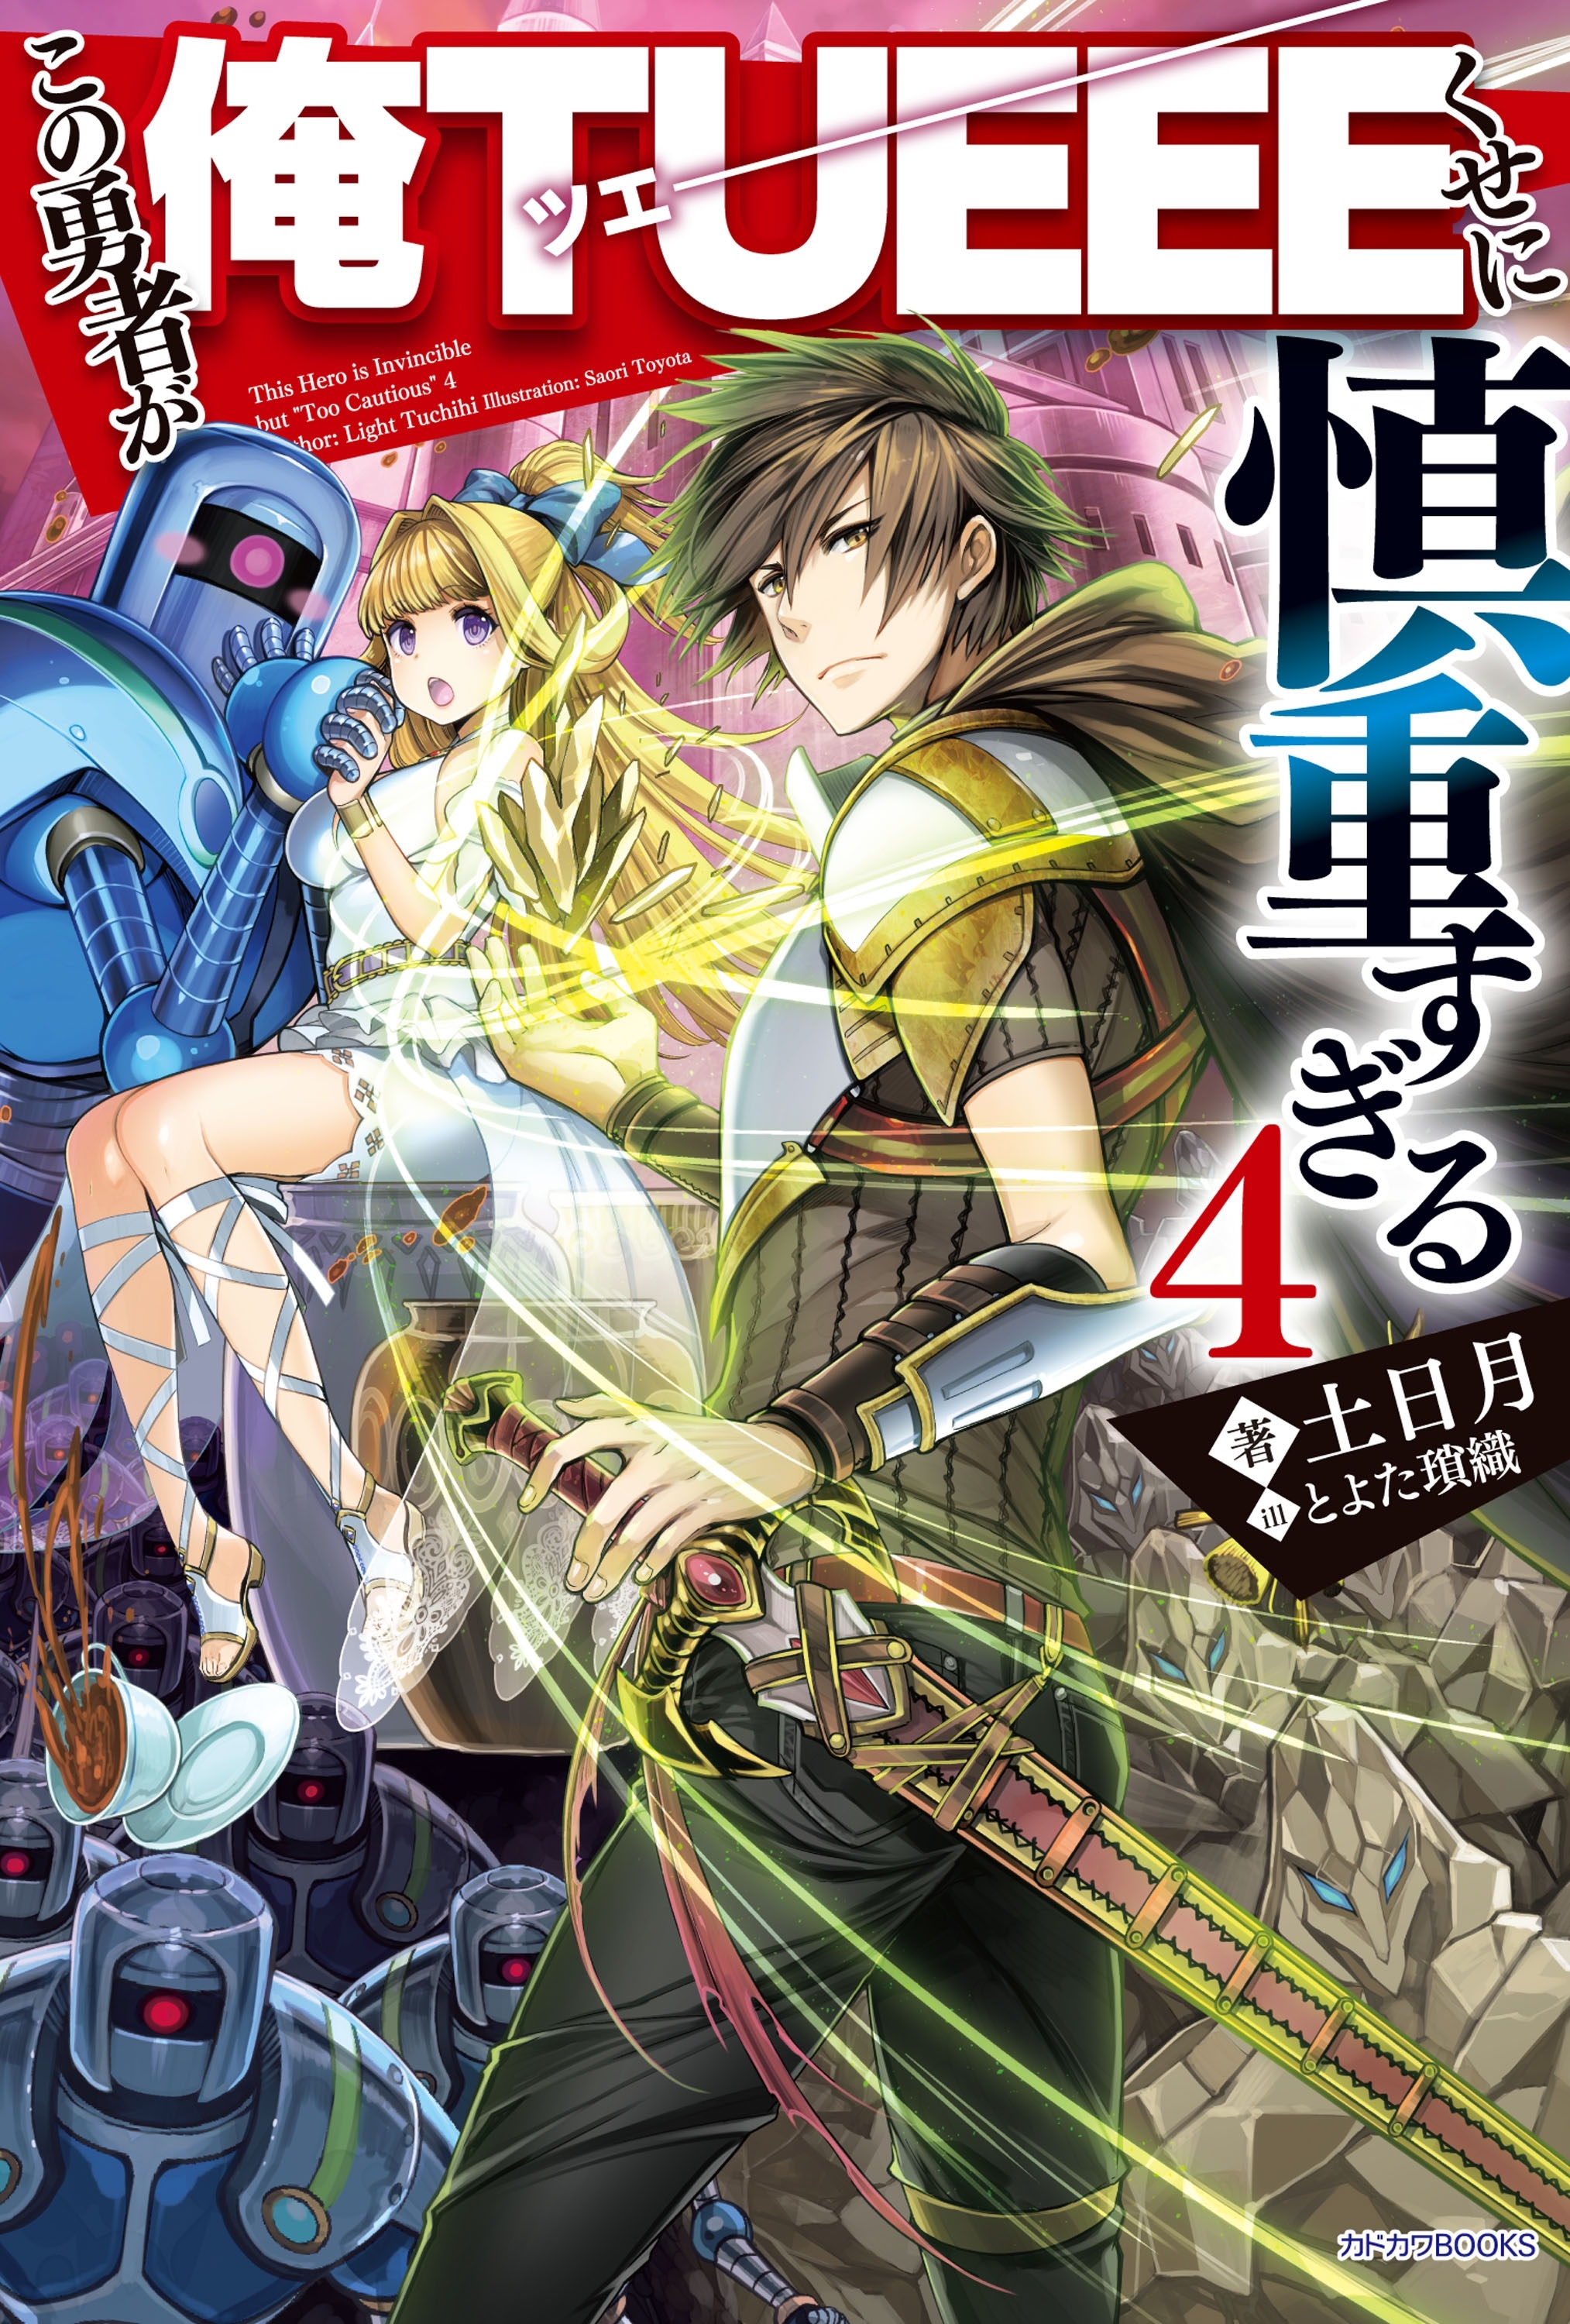 Volume 3 (Light Novel), Cautious Hero Wiki